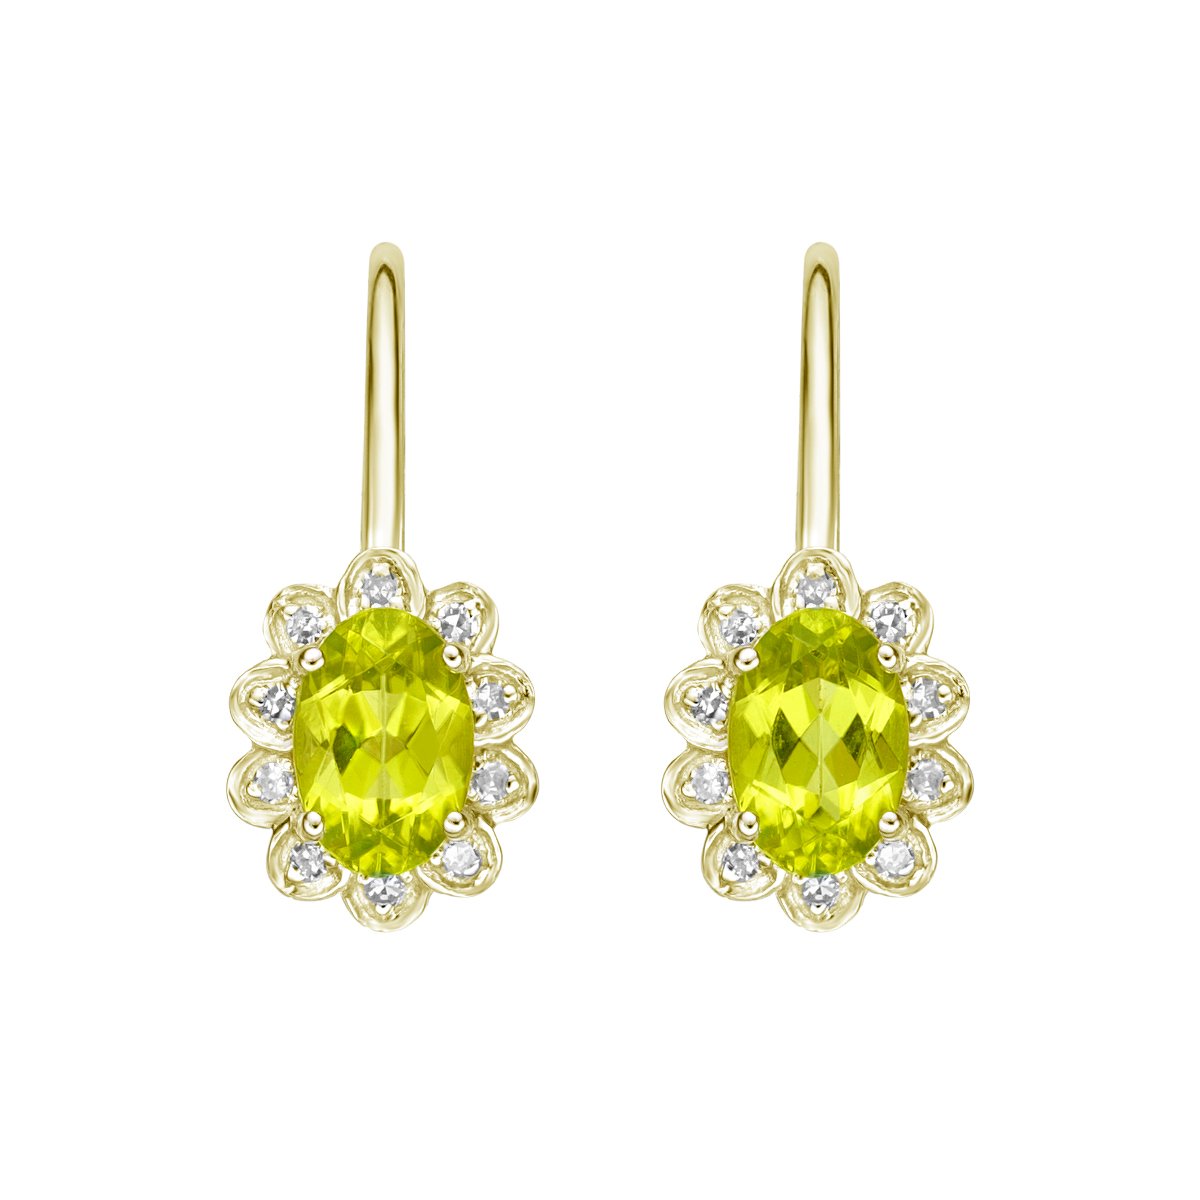 10K Yellow Gold Prong-set Peridot Earrings with Diamond Halo